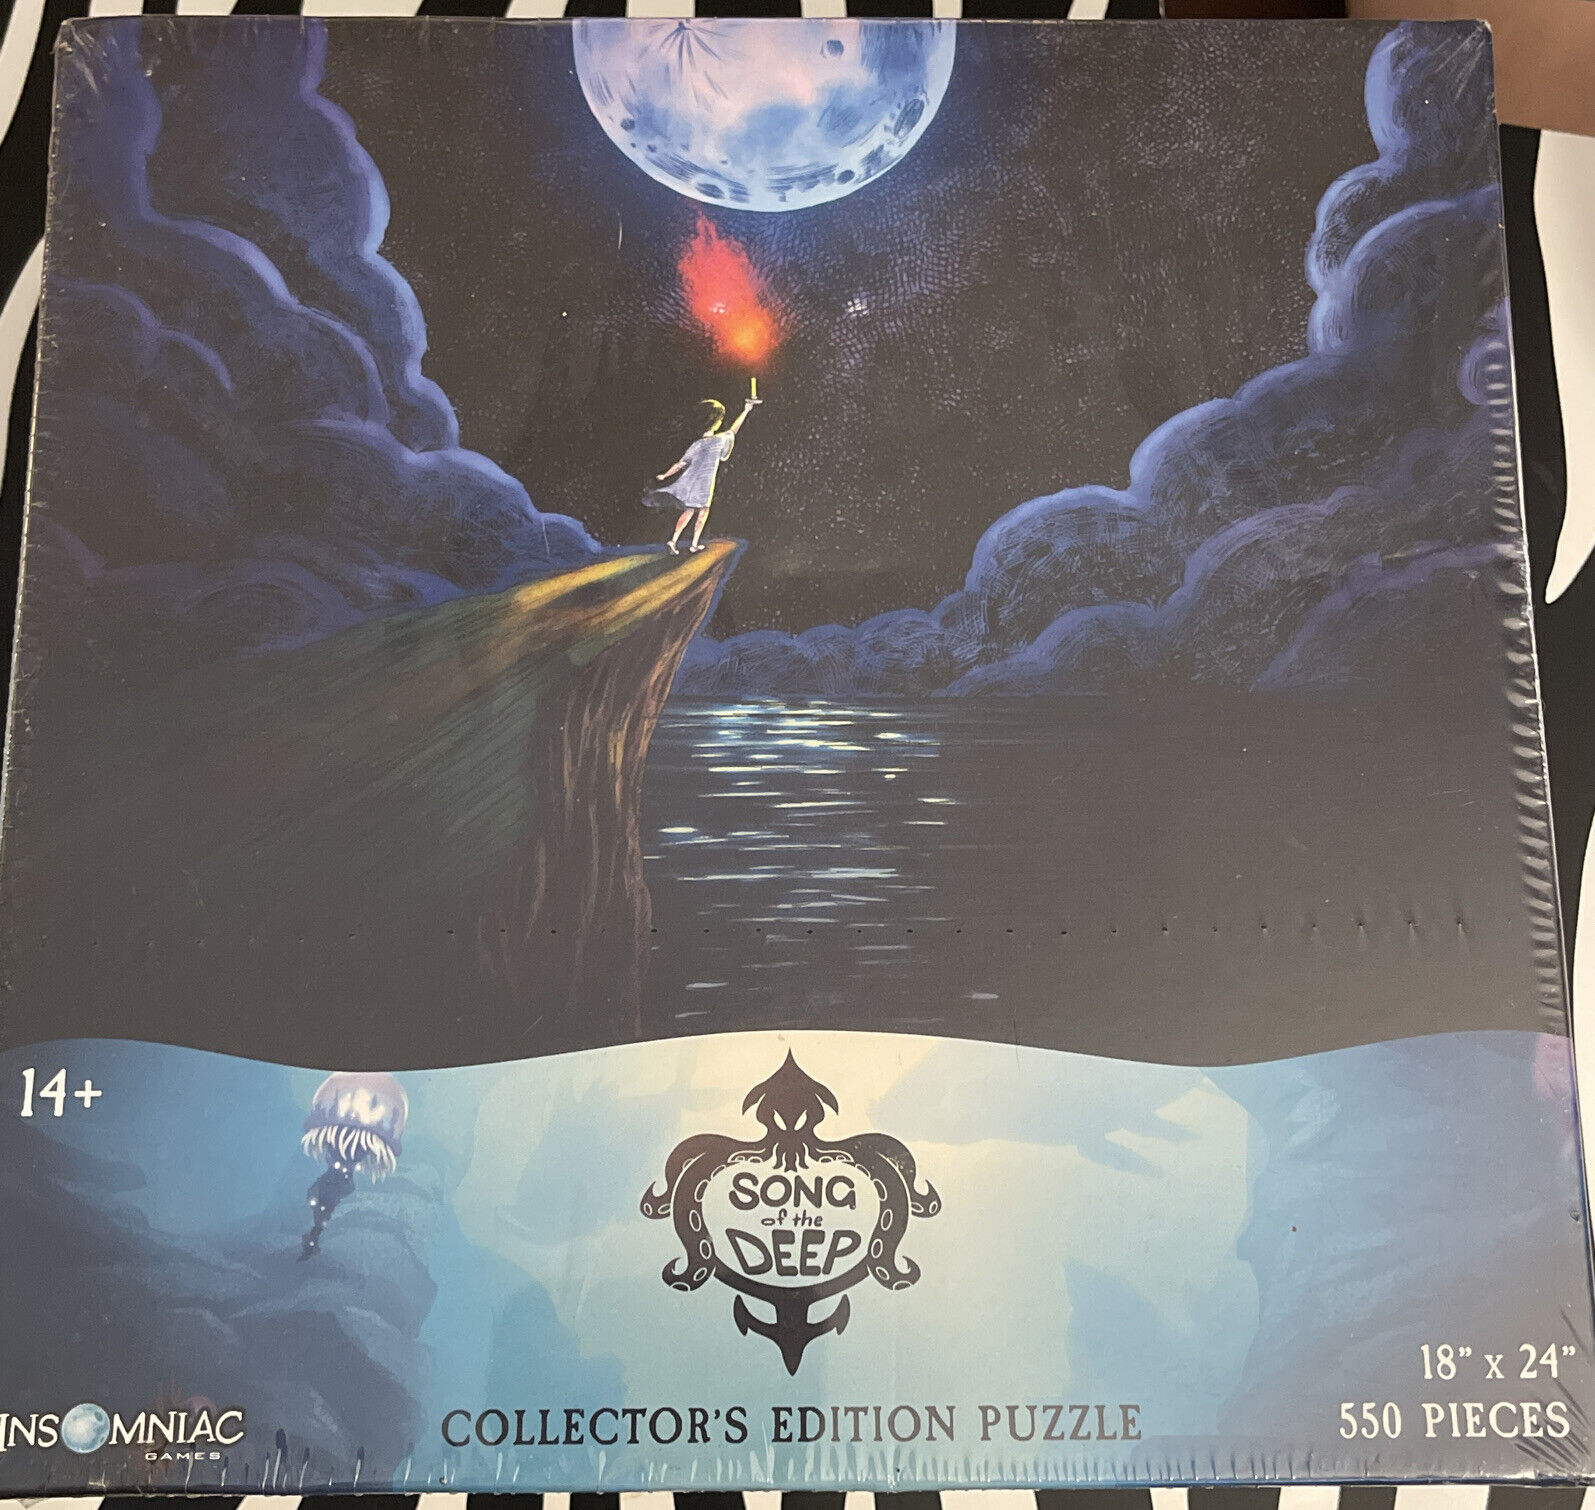 NIB NEW INSOMNIAC Song of Deep Collector's Limited Edition Jigsaw 550 Puzzle  Thinkgeek/Insomniac Games